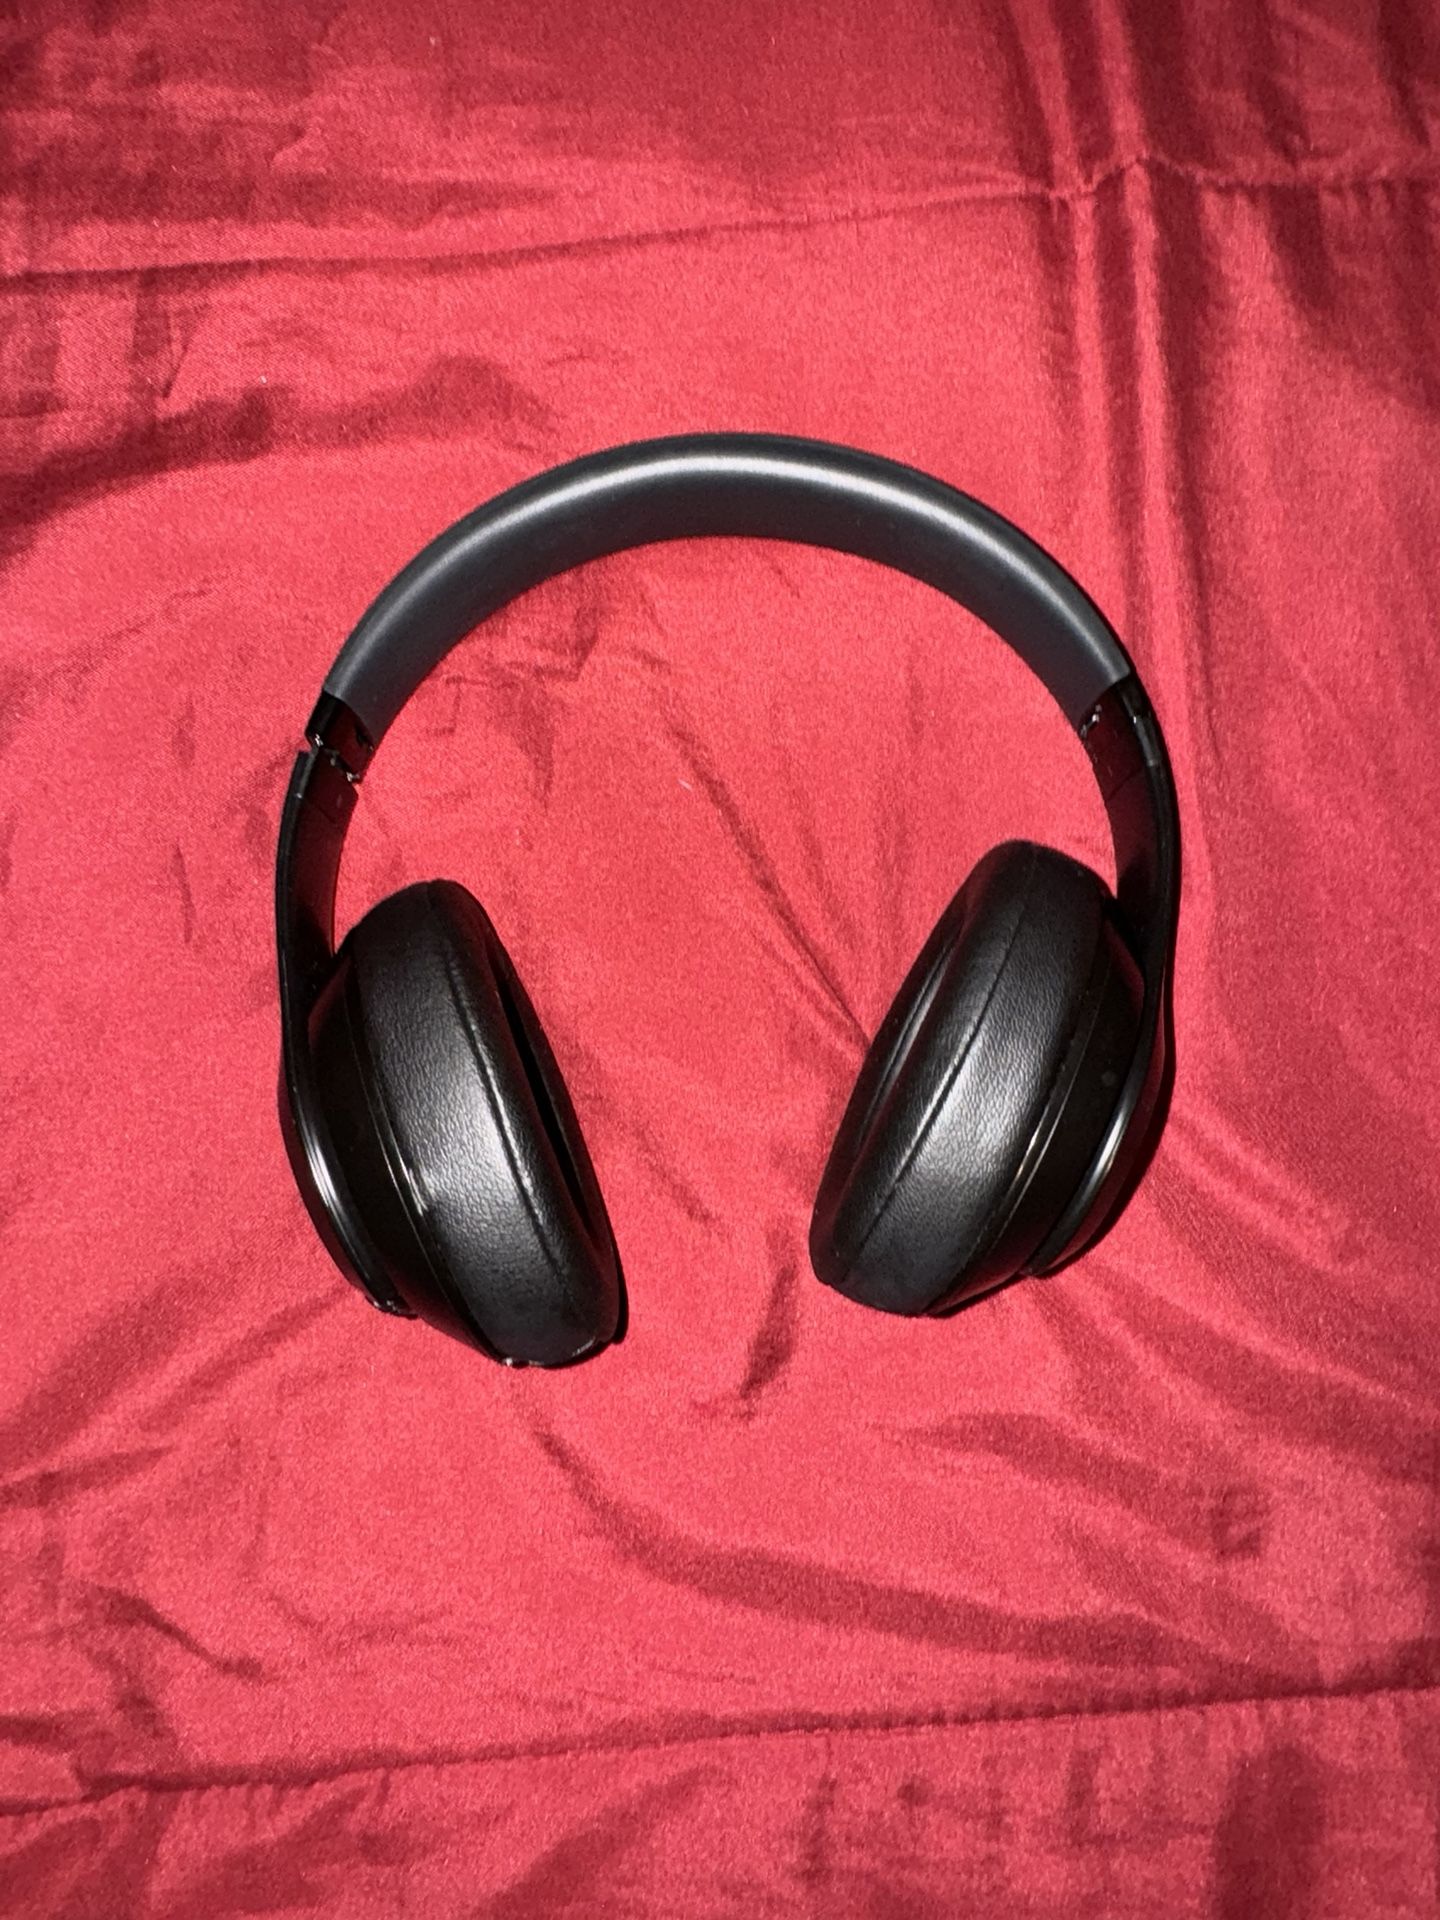 Beats and Bose Headphones